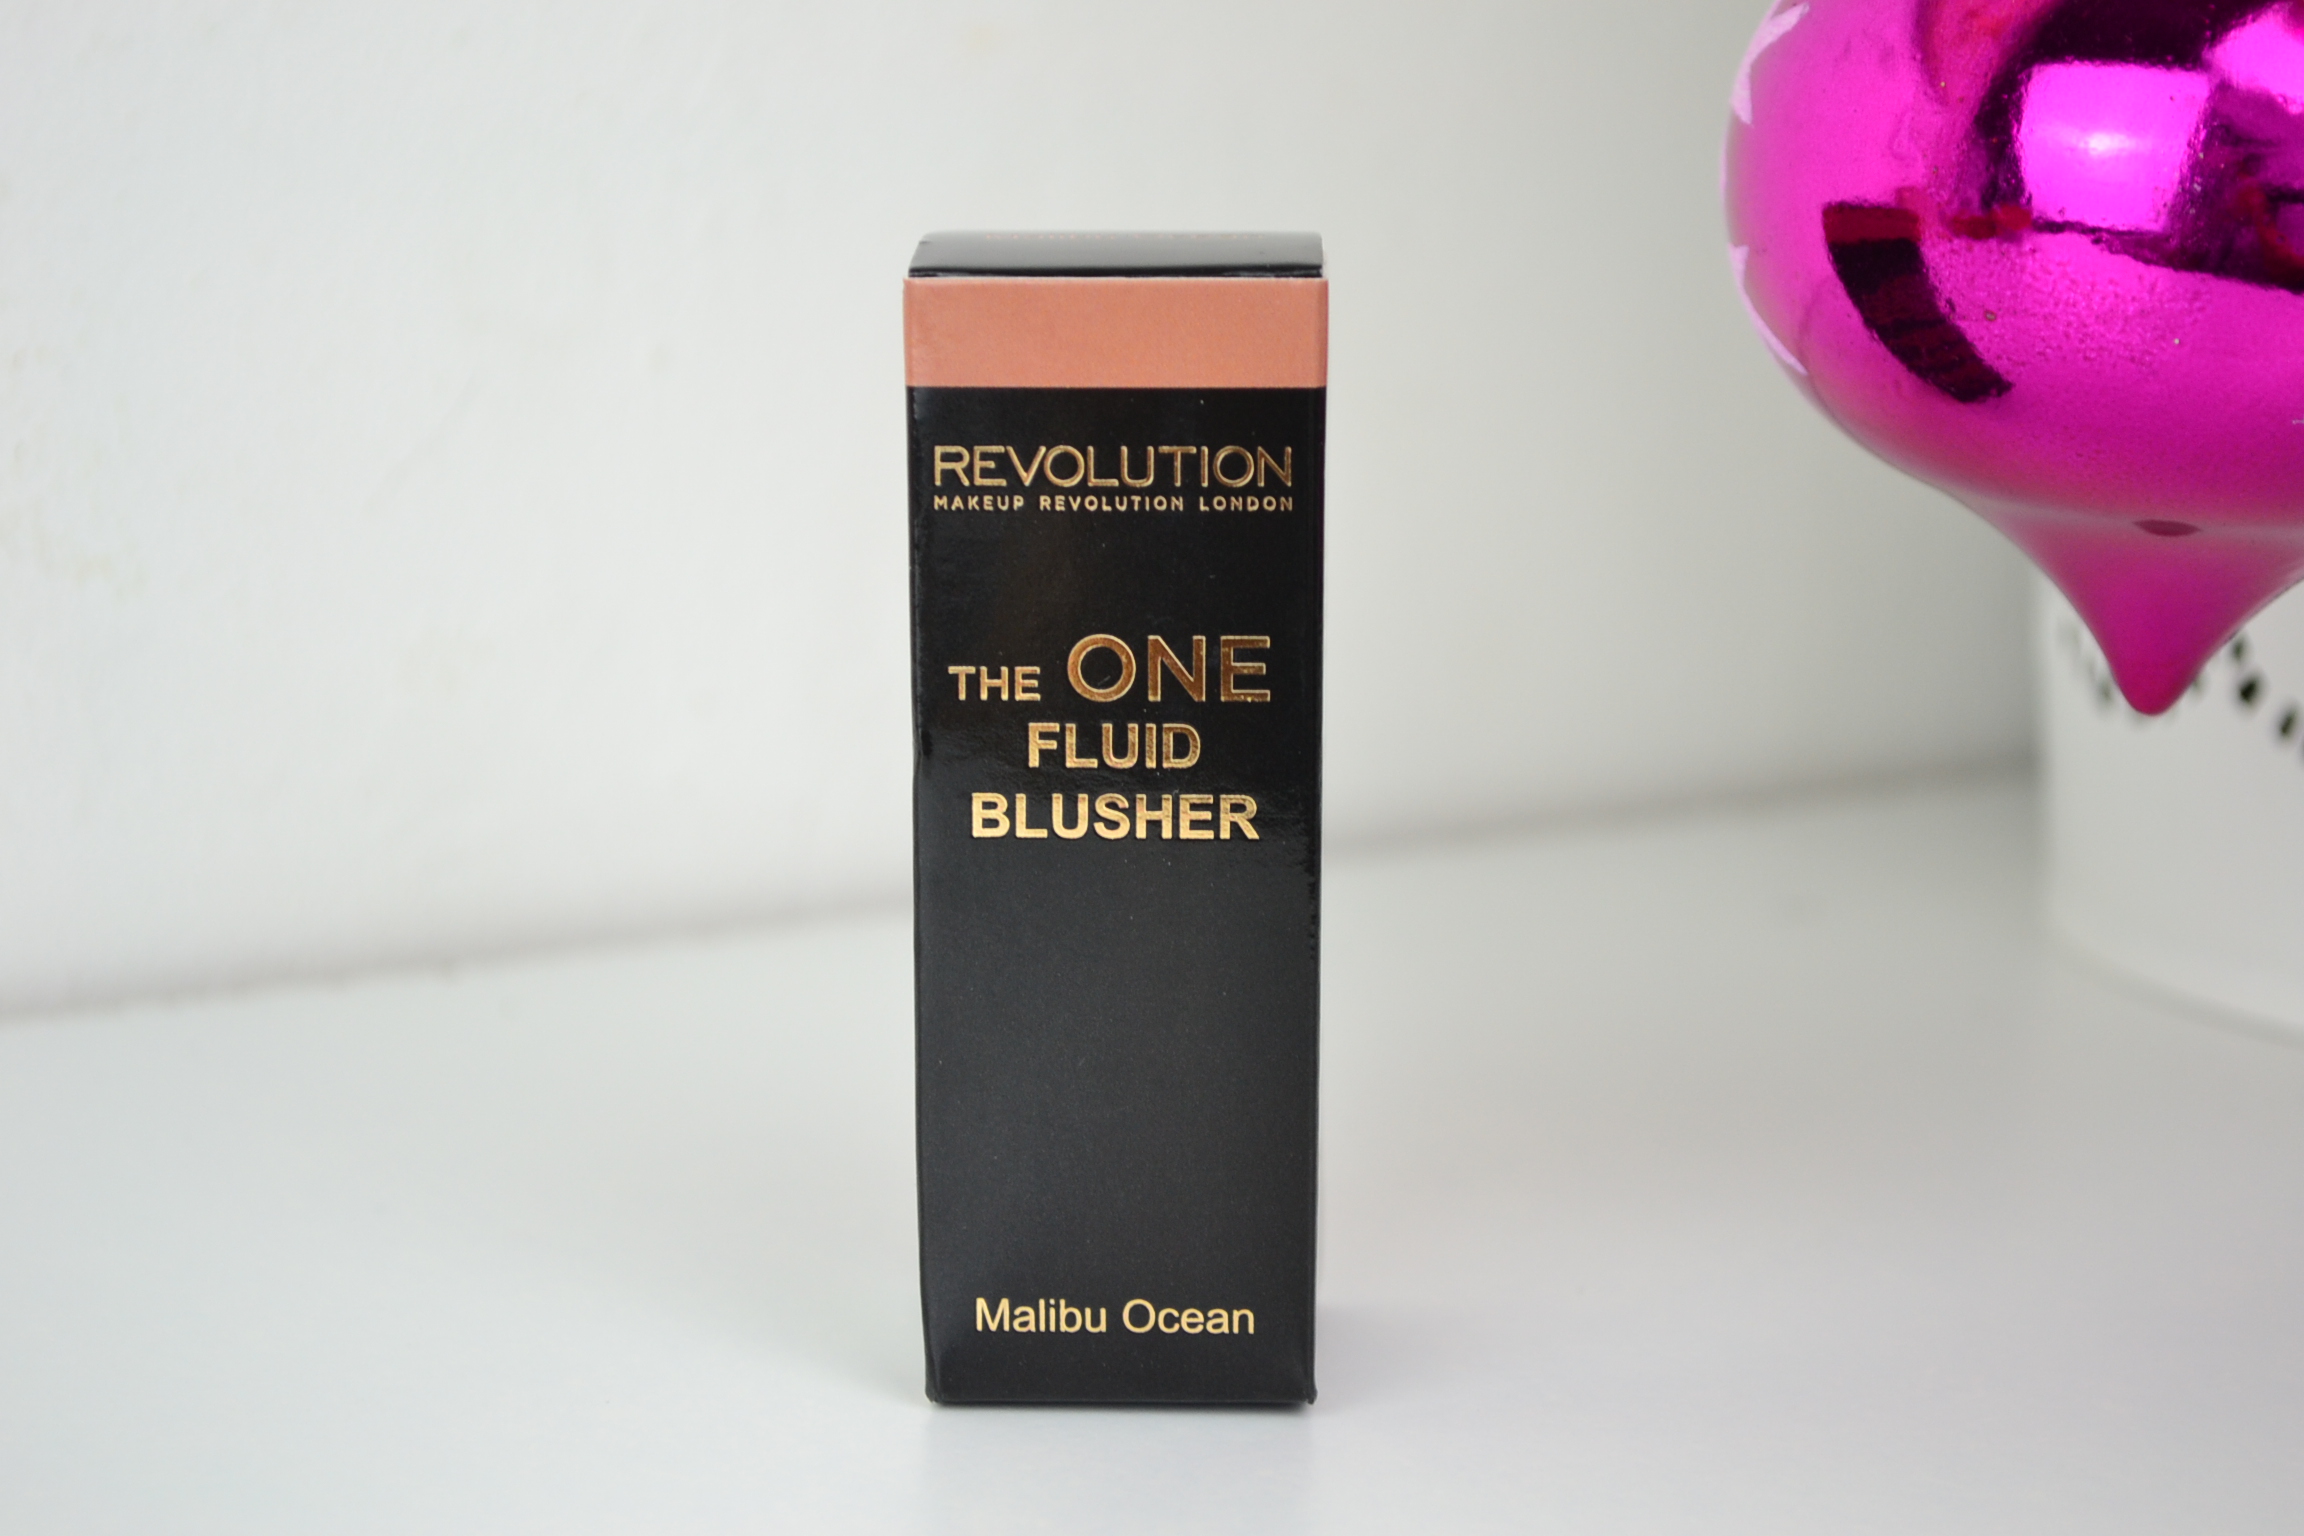 Makeup Revolution The One Fluid Blusher - Malibu Ocean